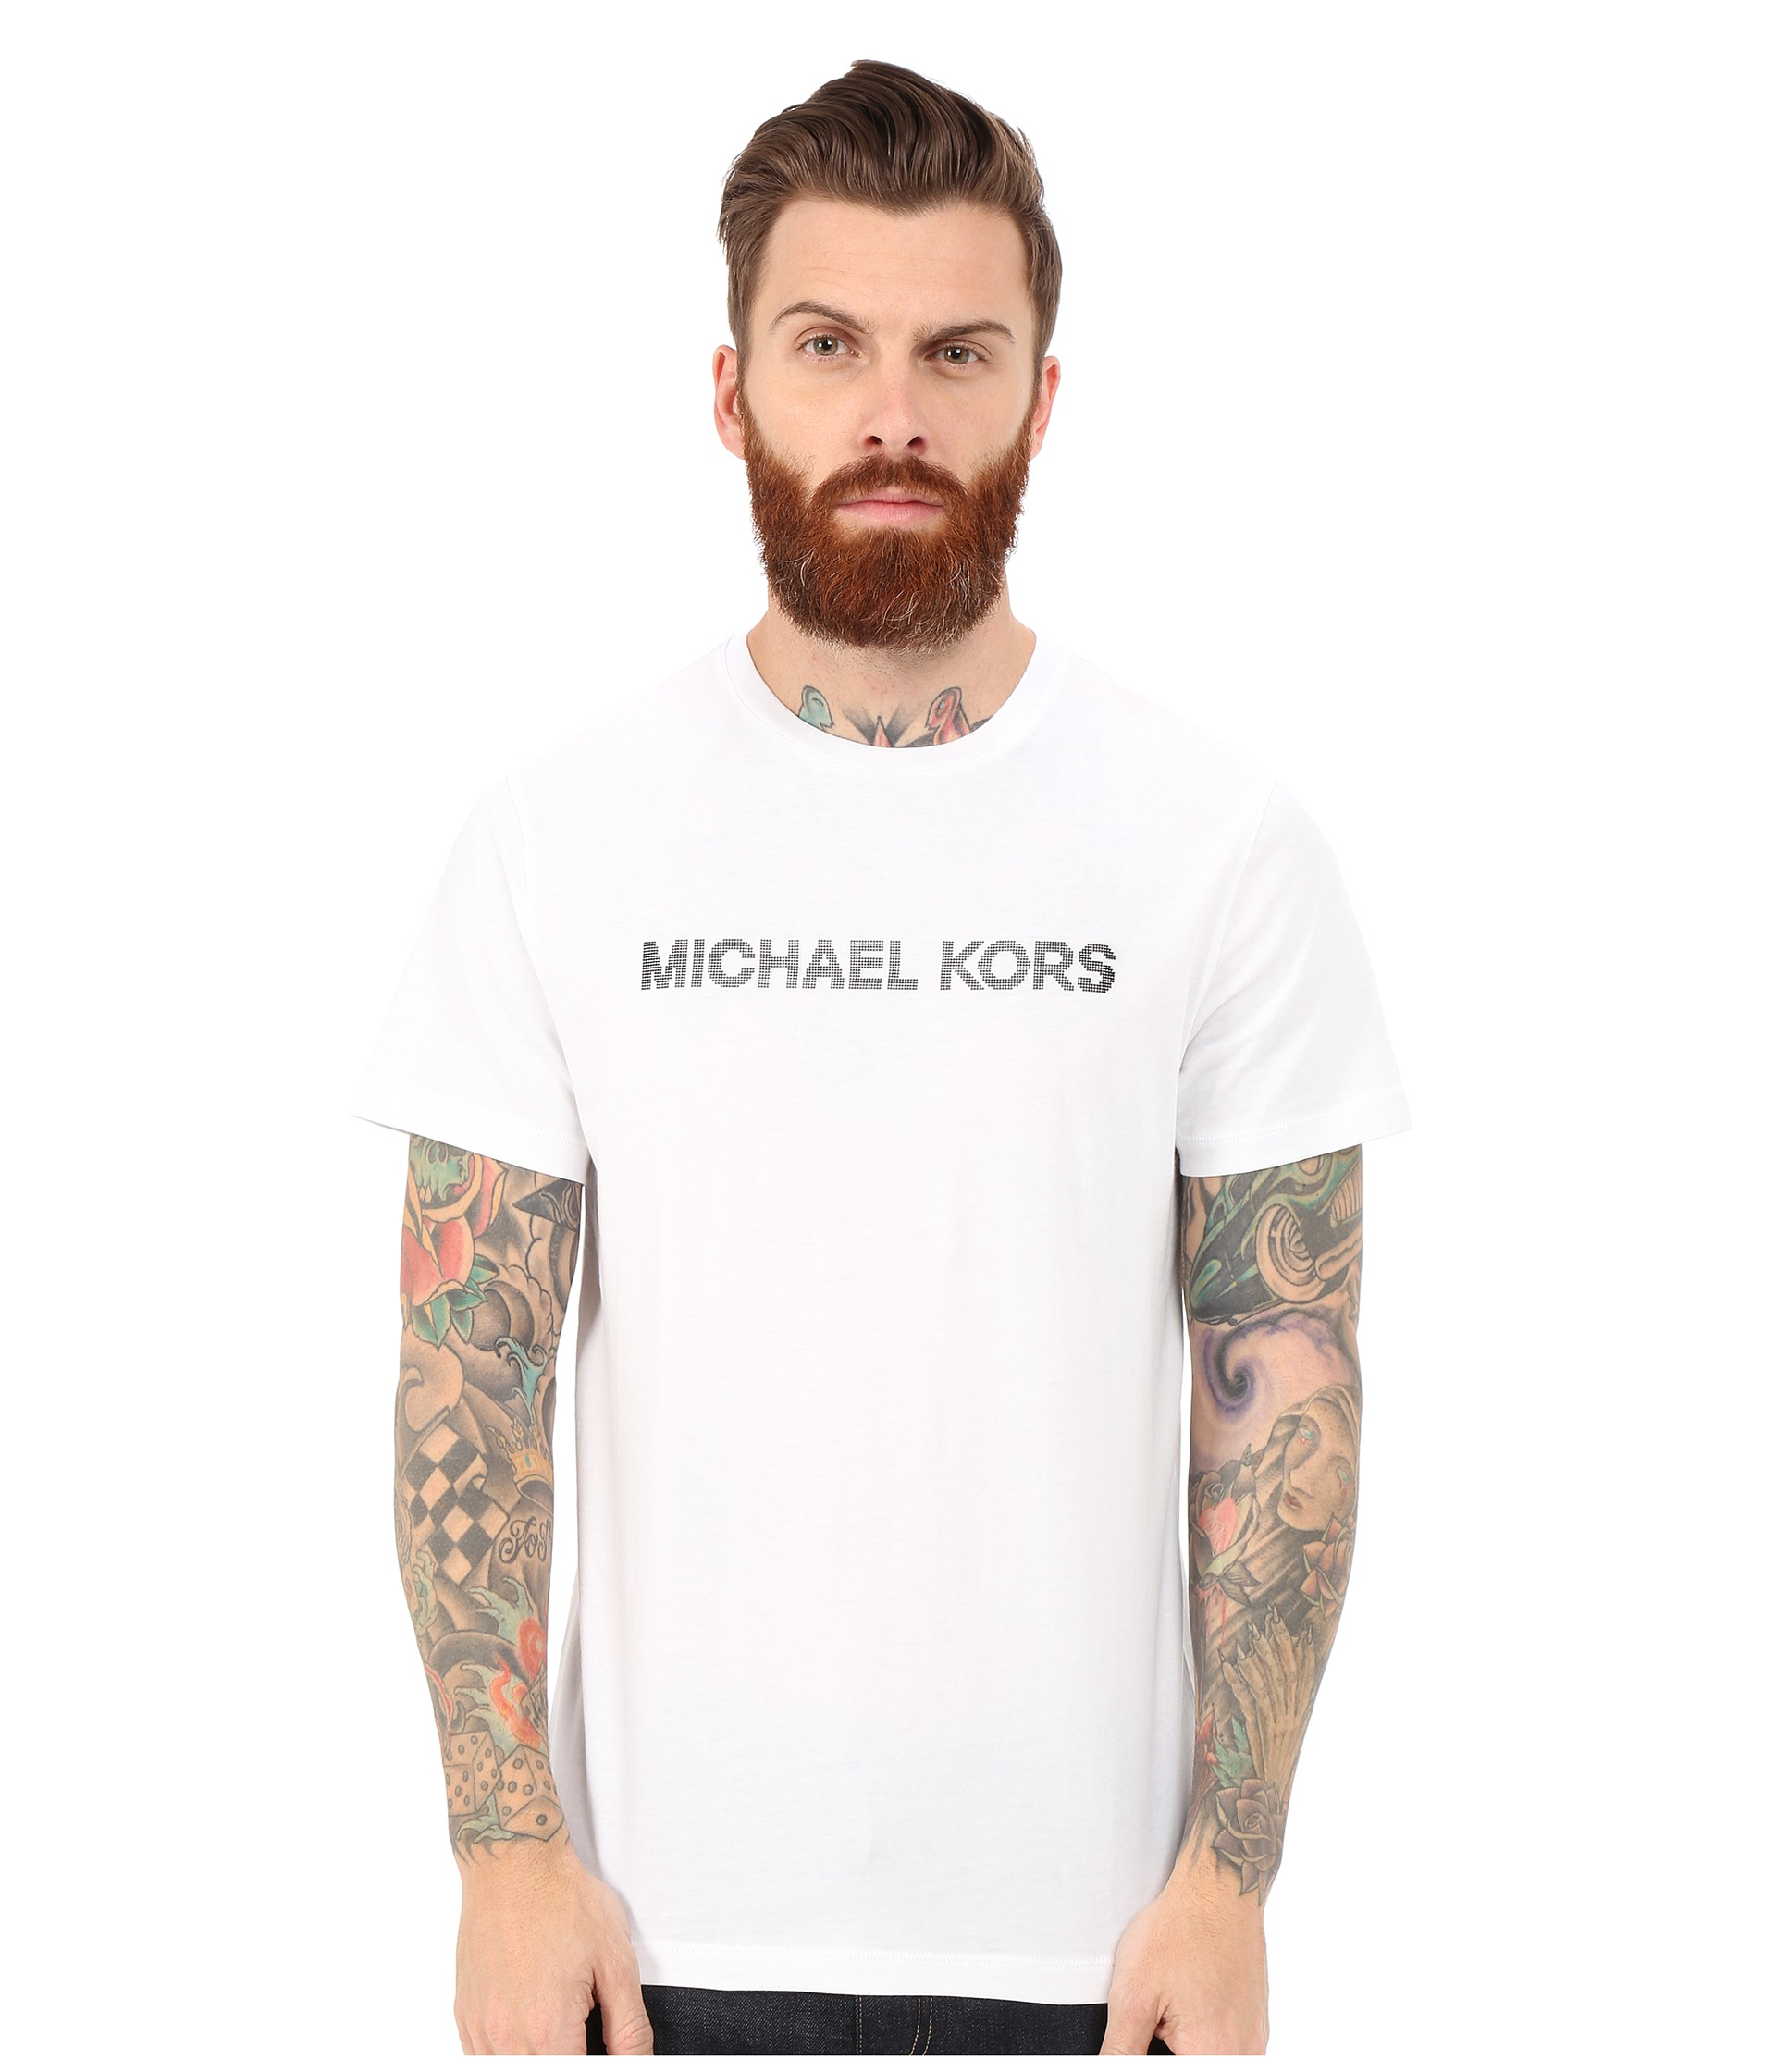 michael kors shirt price